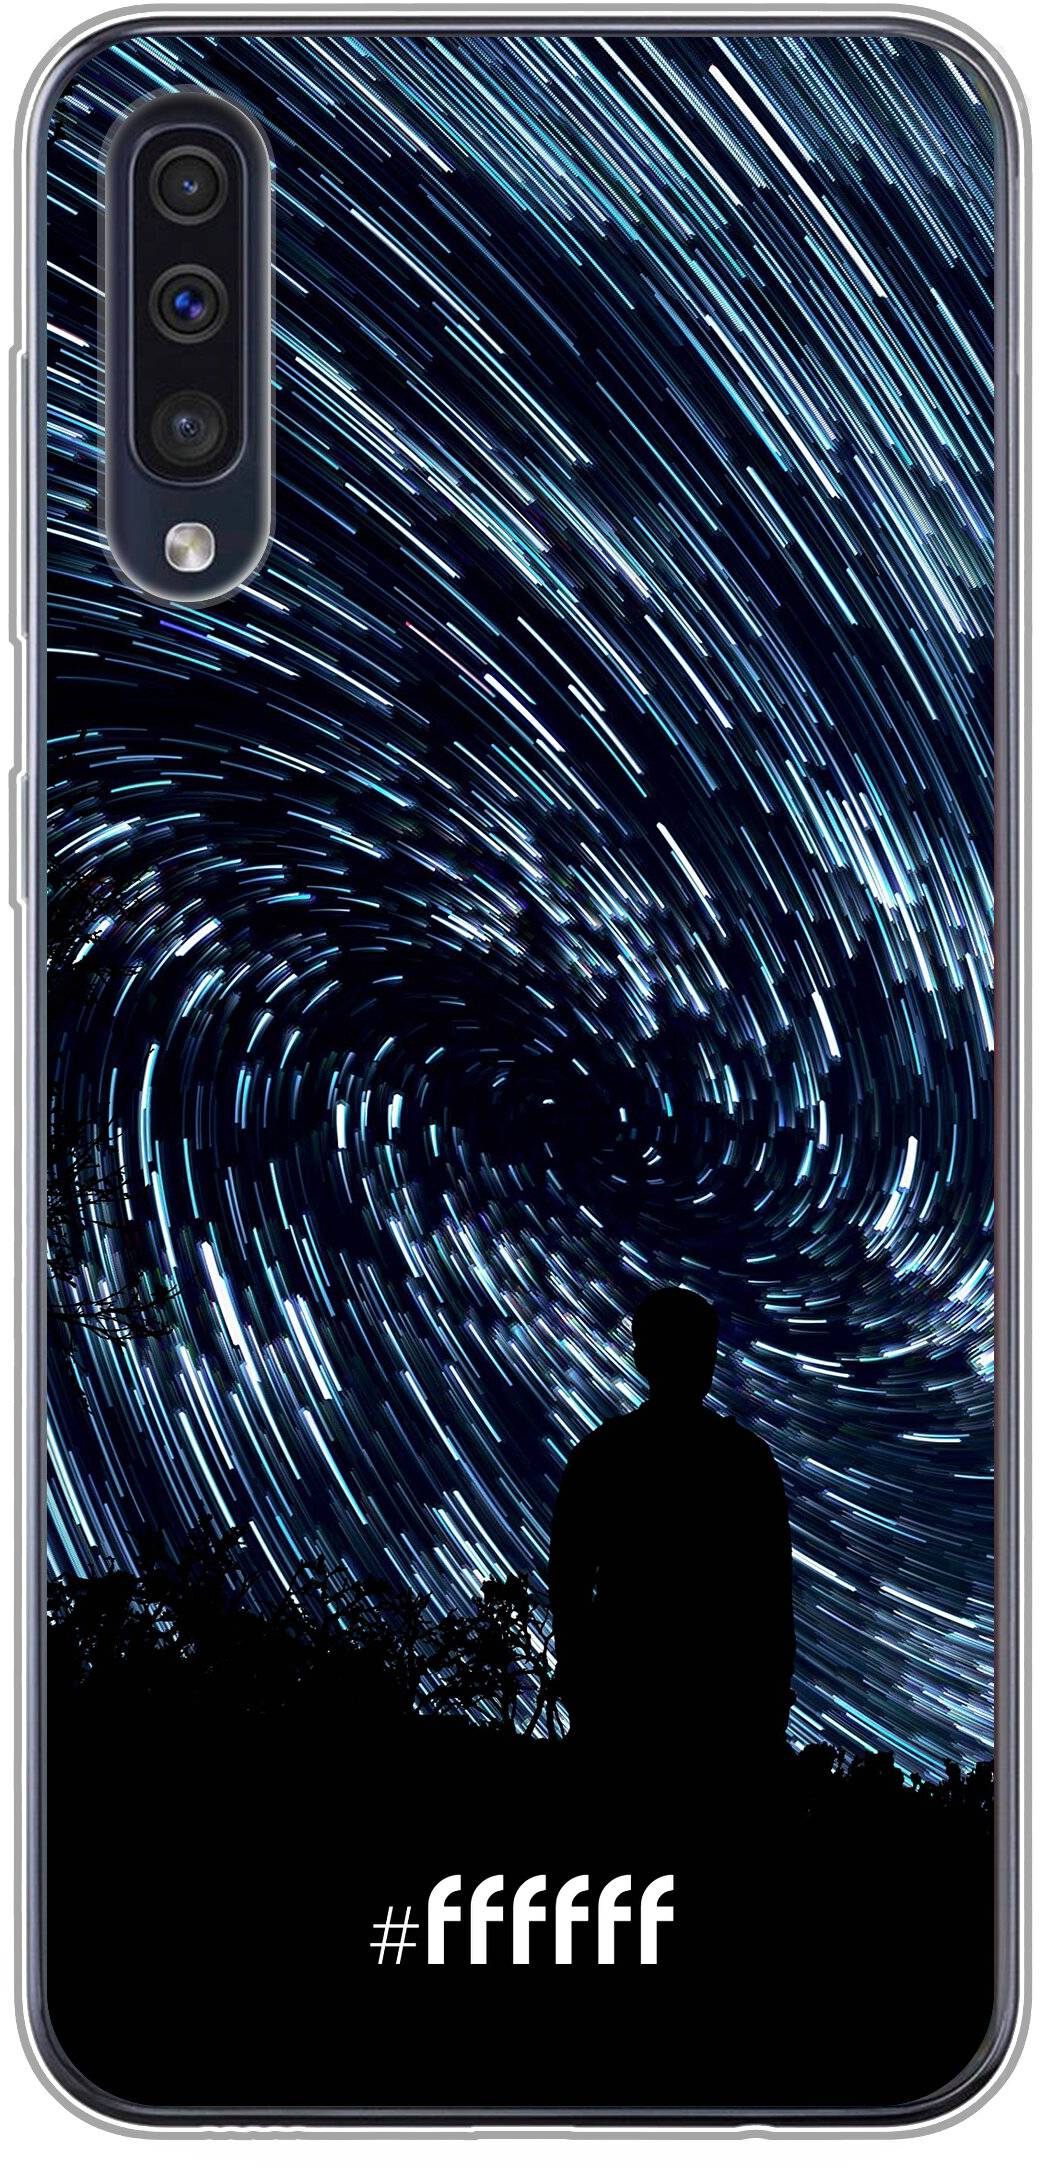 Starry Circles Galaxy A50s